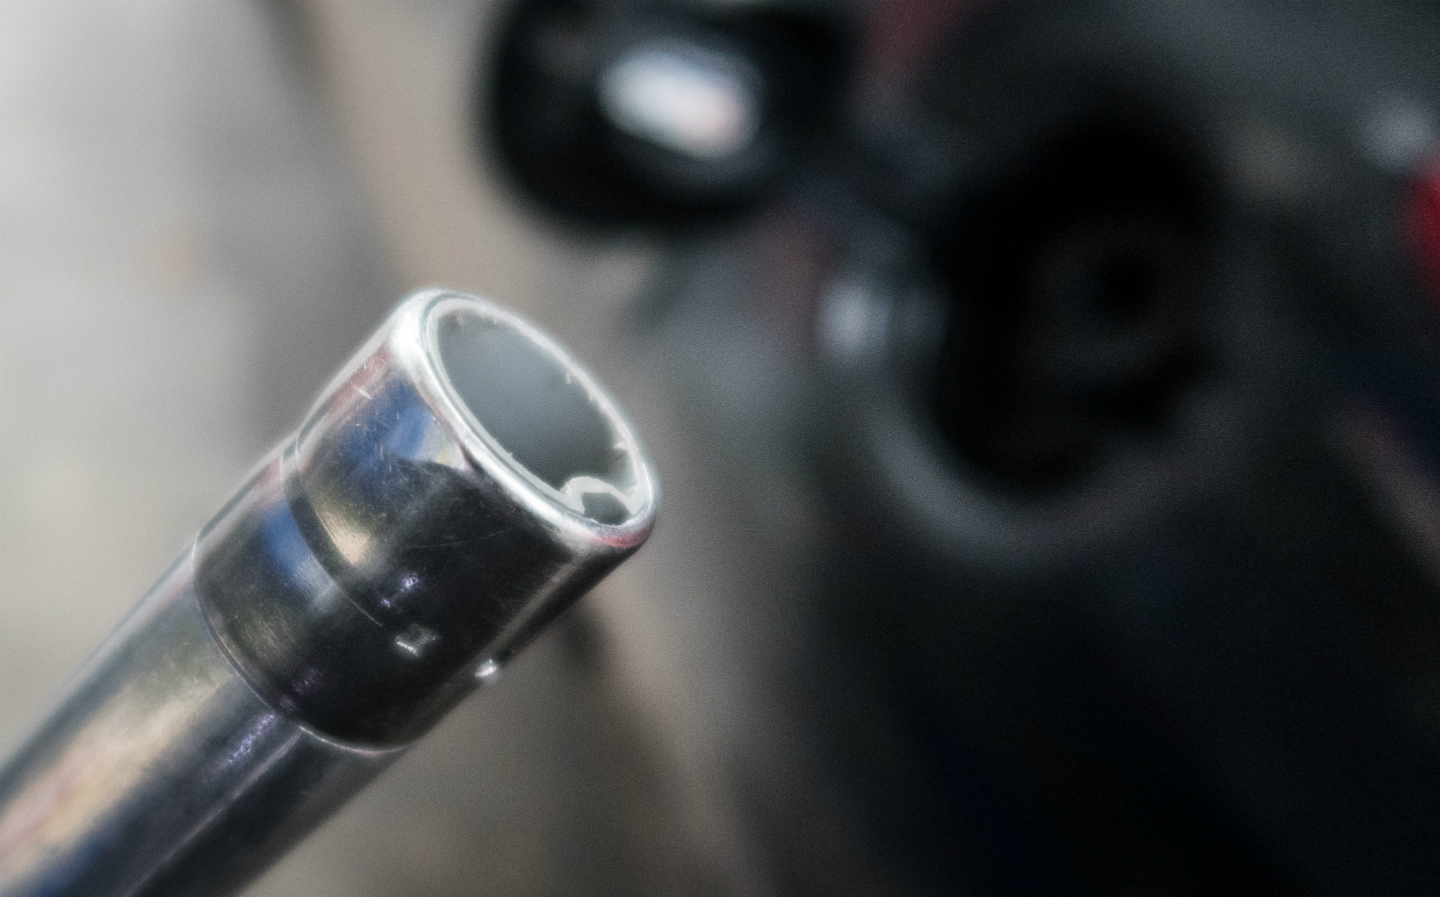 Fuel pump prices surge in "bleak" April for motorists